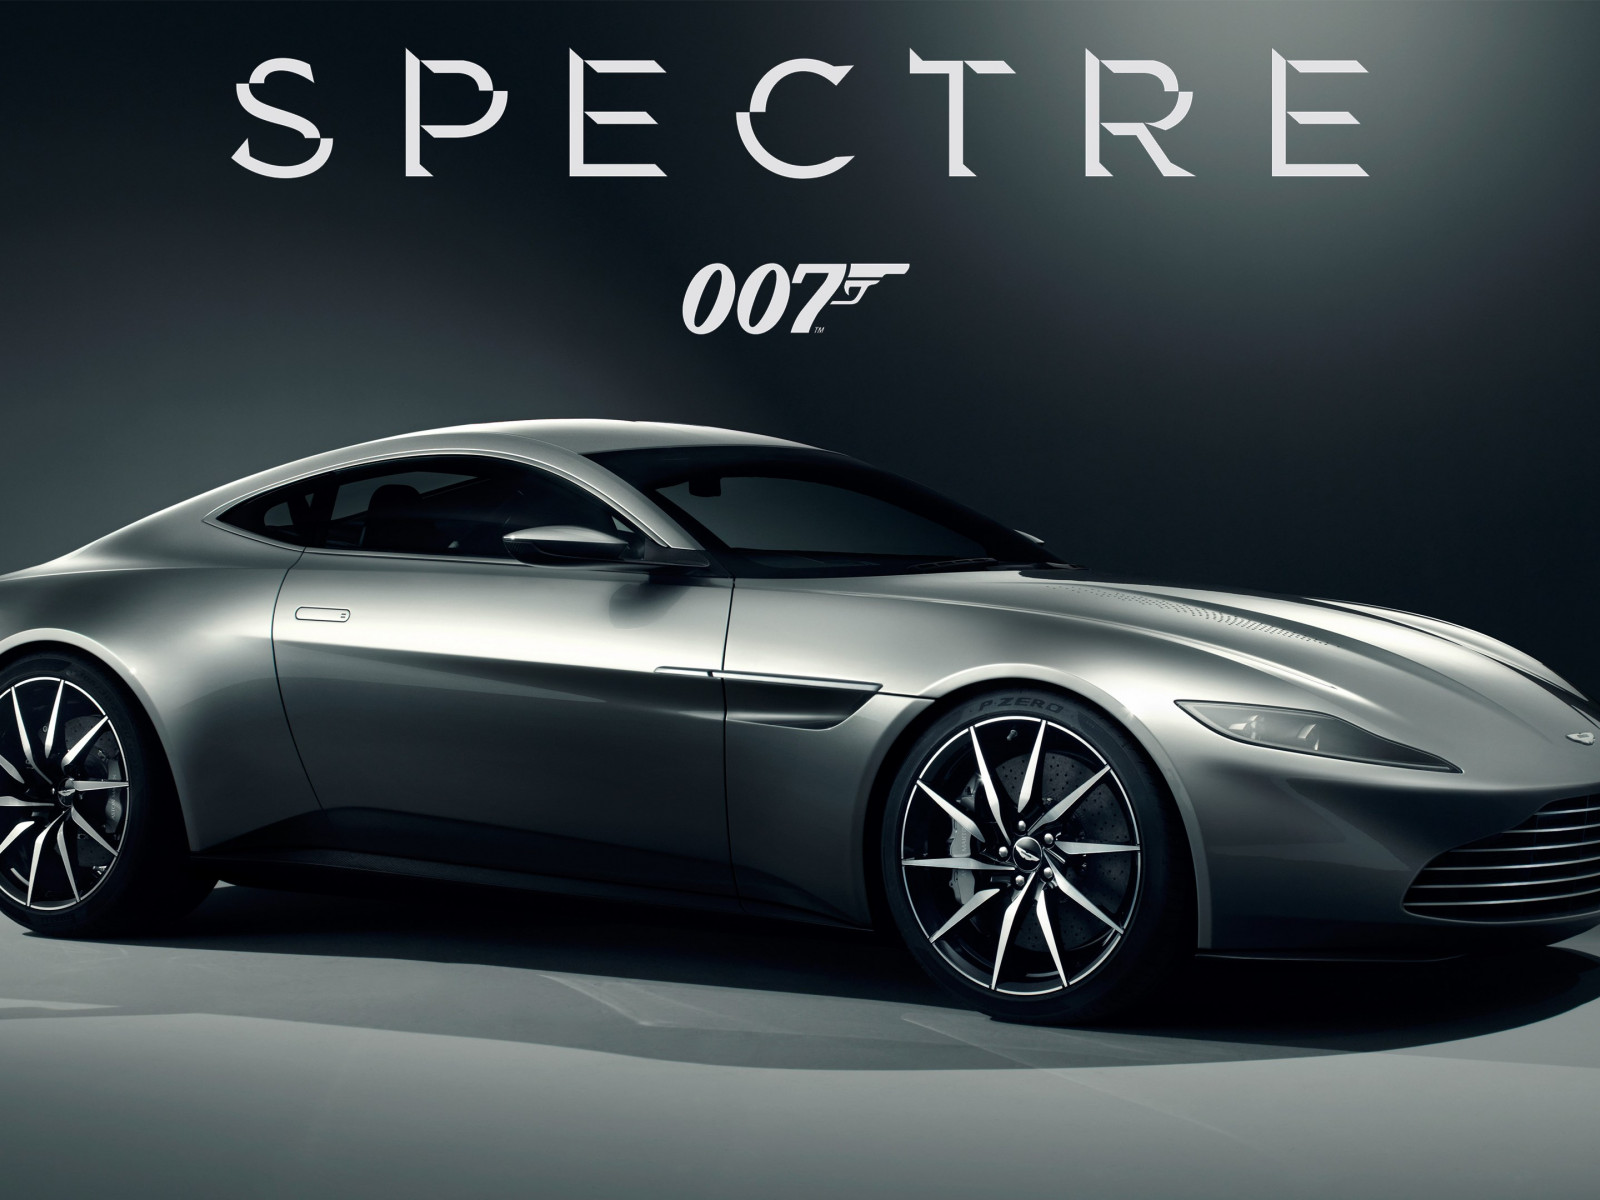 Aston Martin DB10 007 Spectre car wallpaper 1600x1200